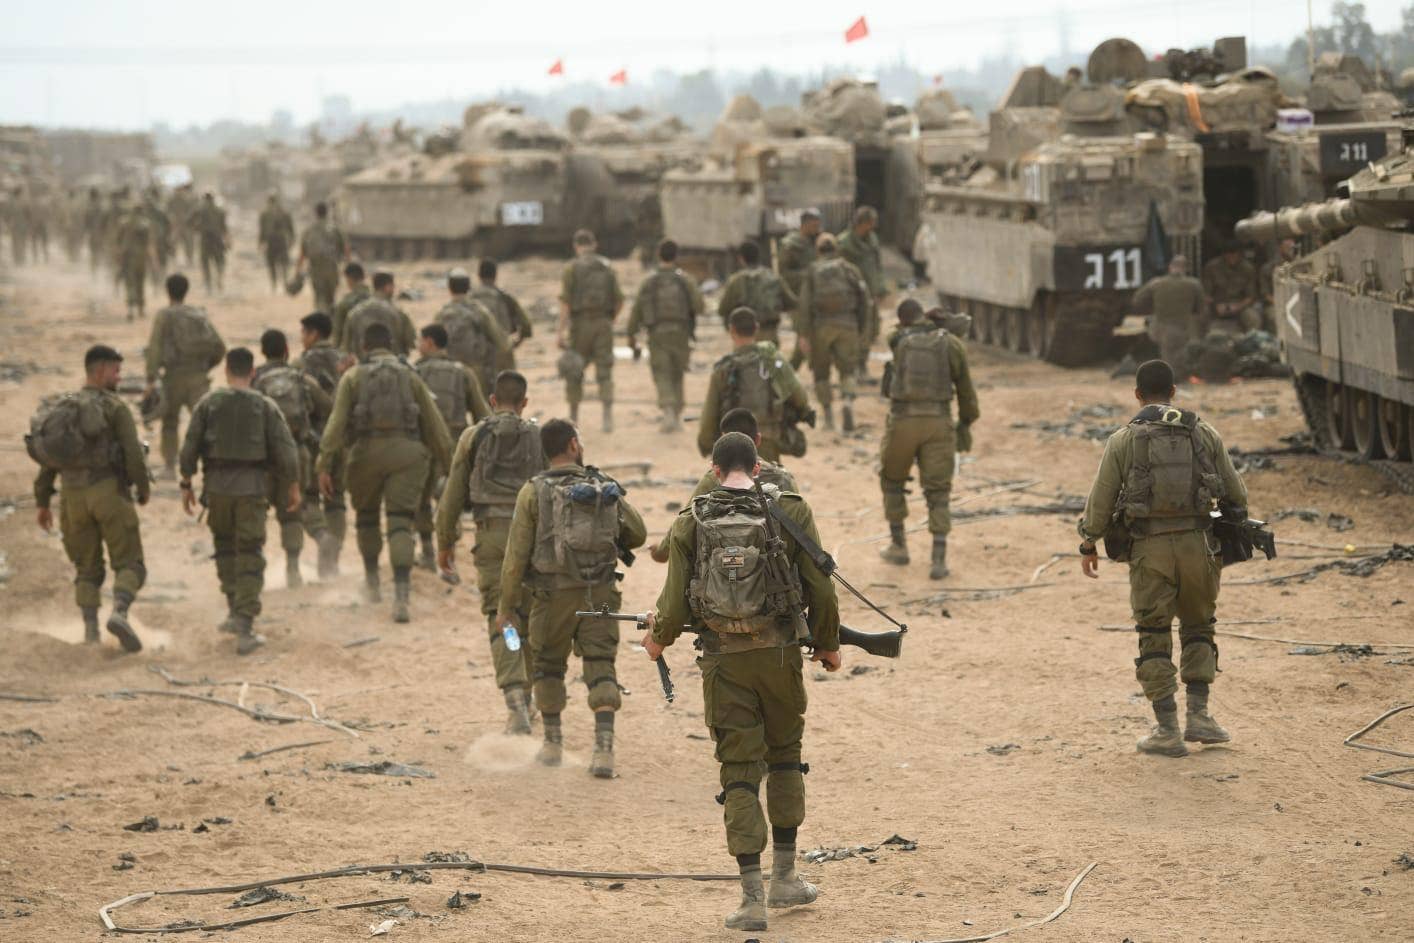 IDF infantry soldiers walk on dirt